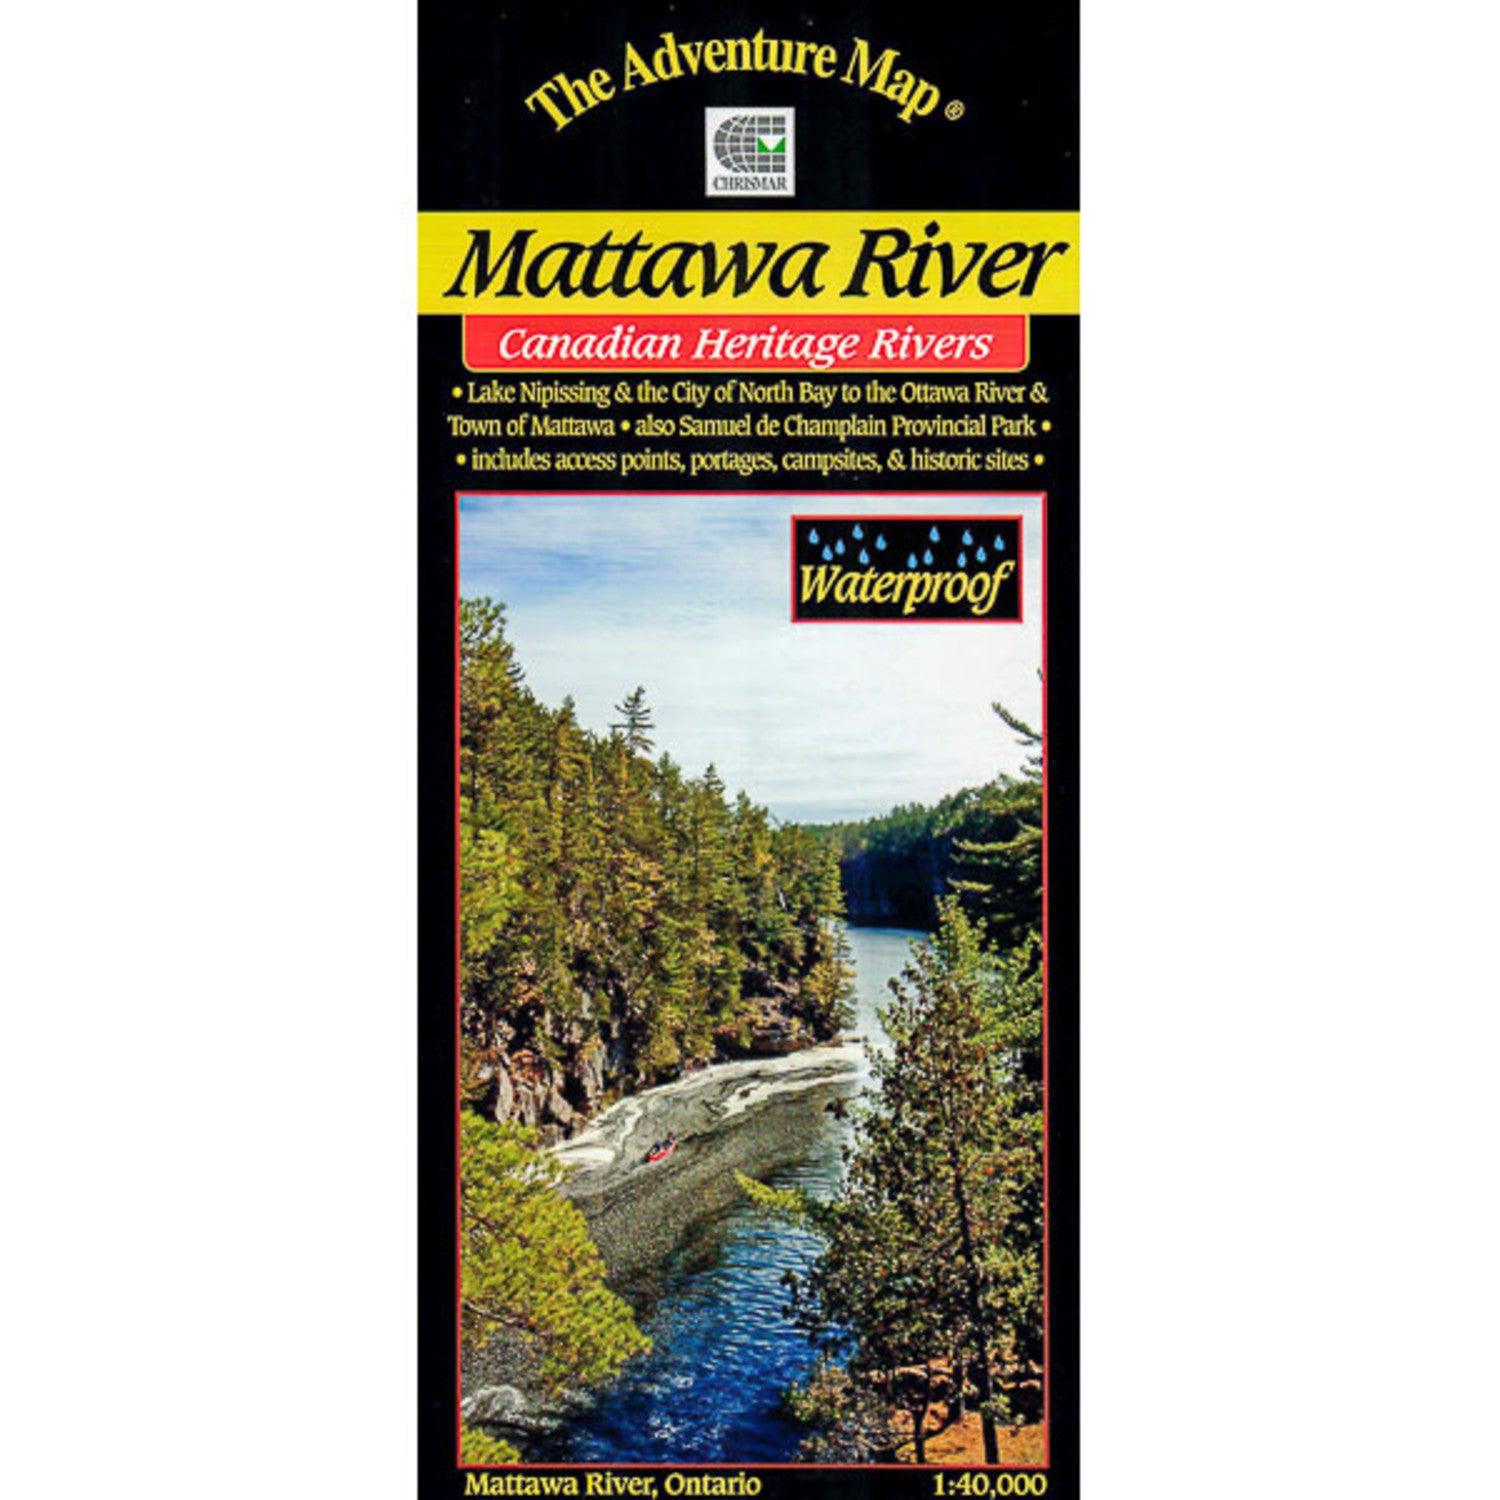 Mattawa River Adventure Map